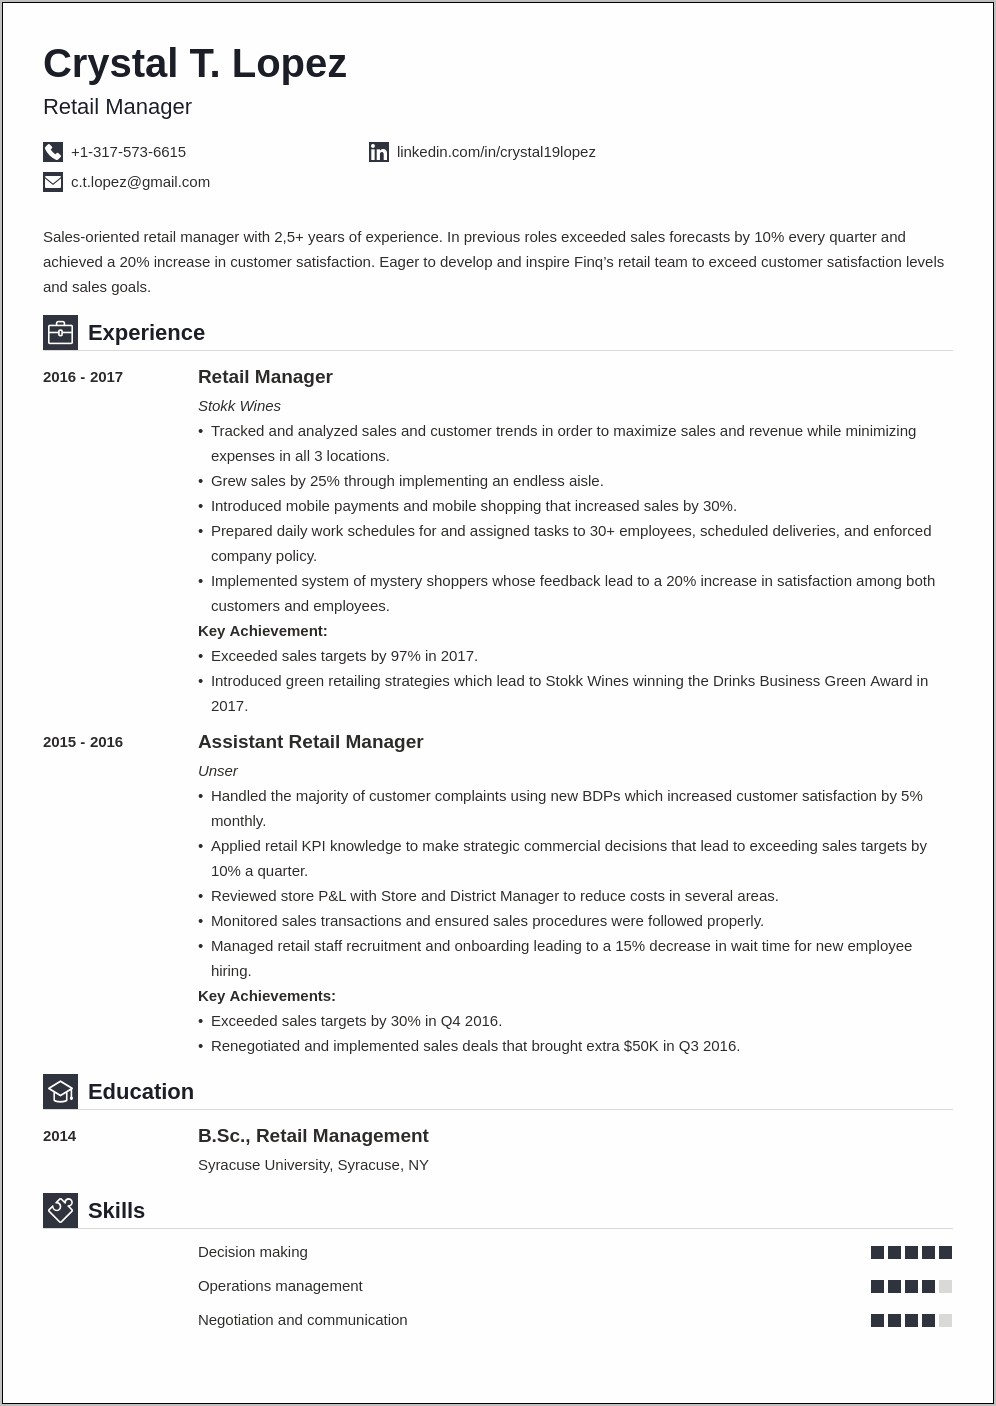 Retail Sales Supervisor Job Description Resume